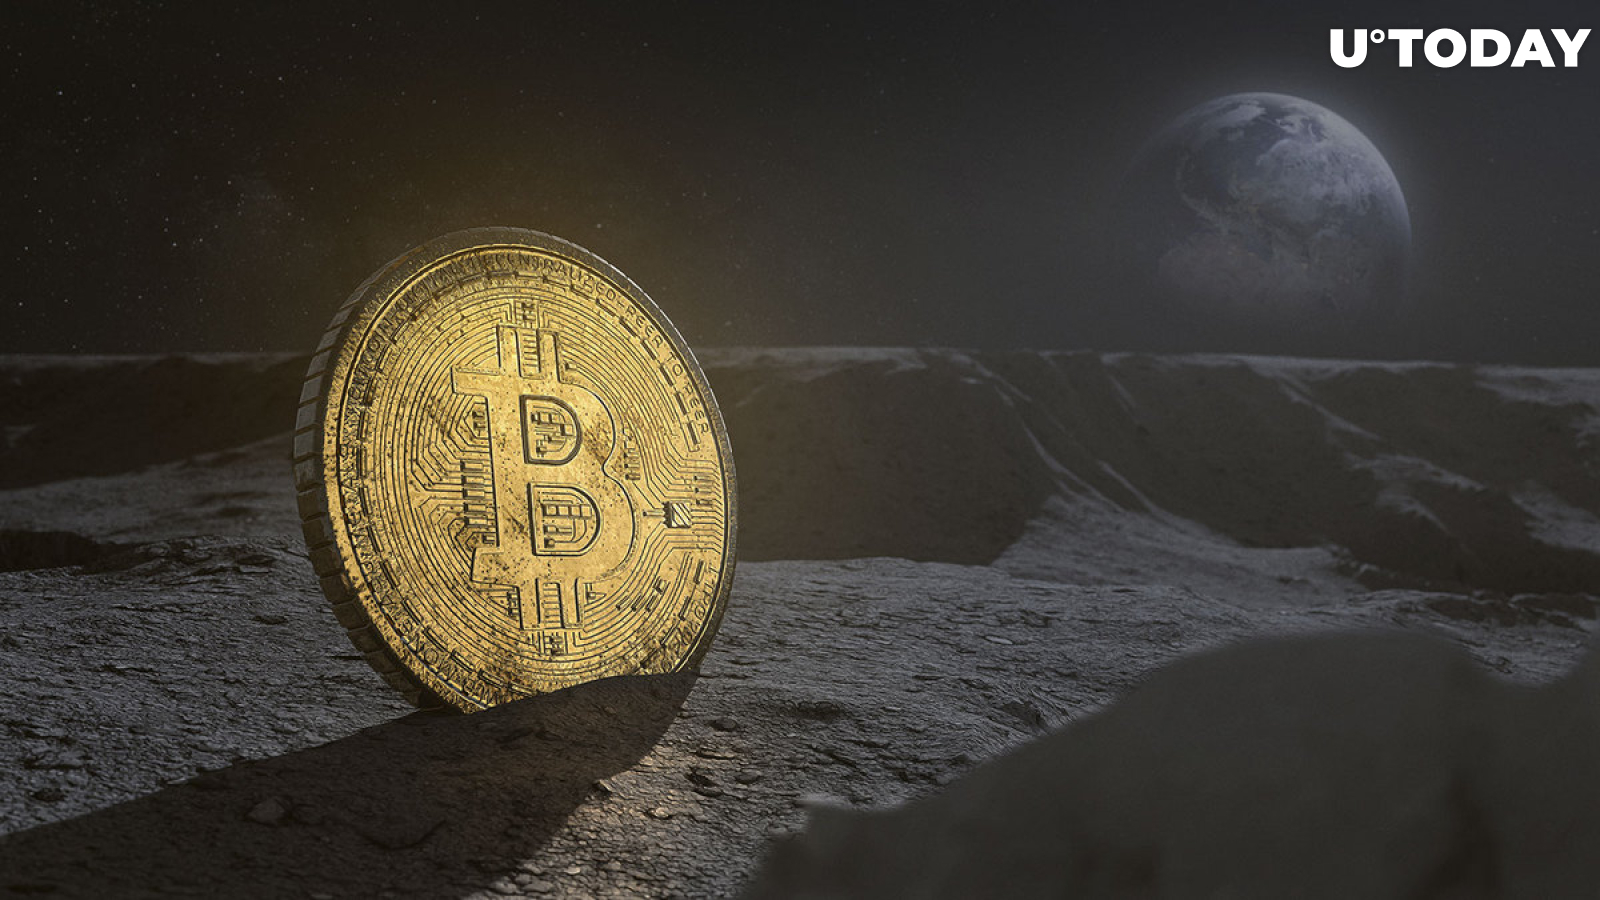 Star Trek Legend William Shatner Wants Bitcoin (BTC) to Go to Moon